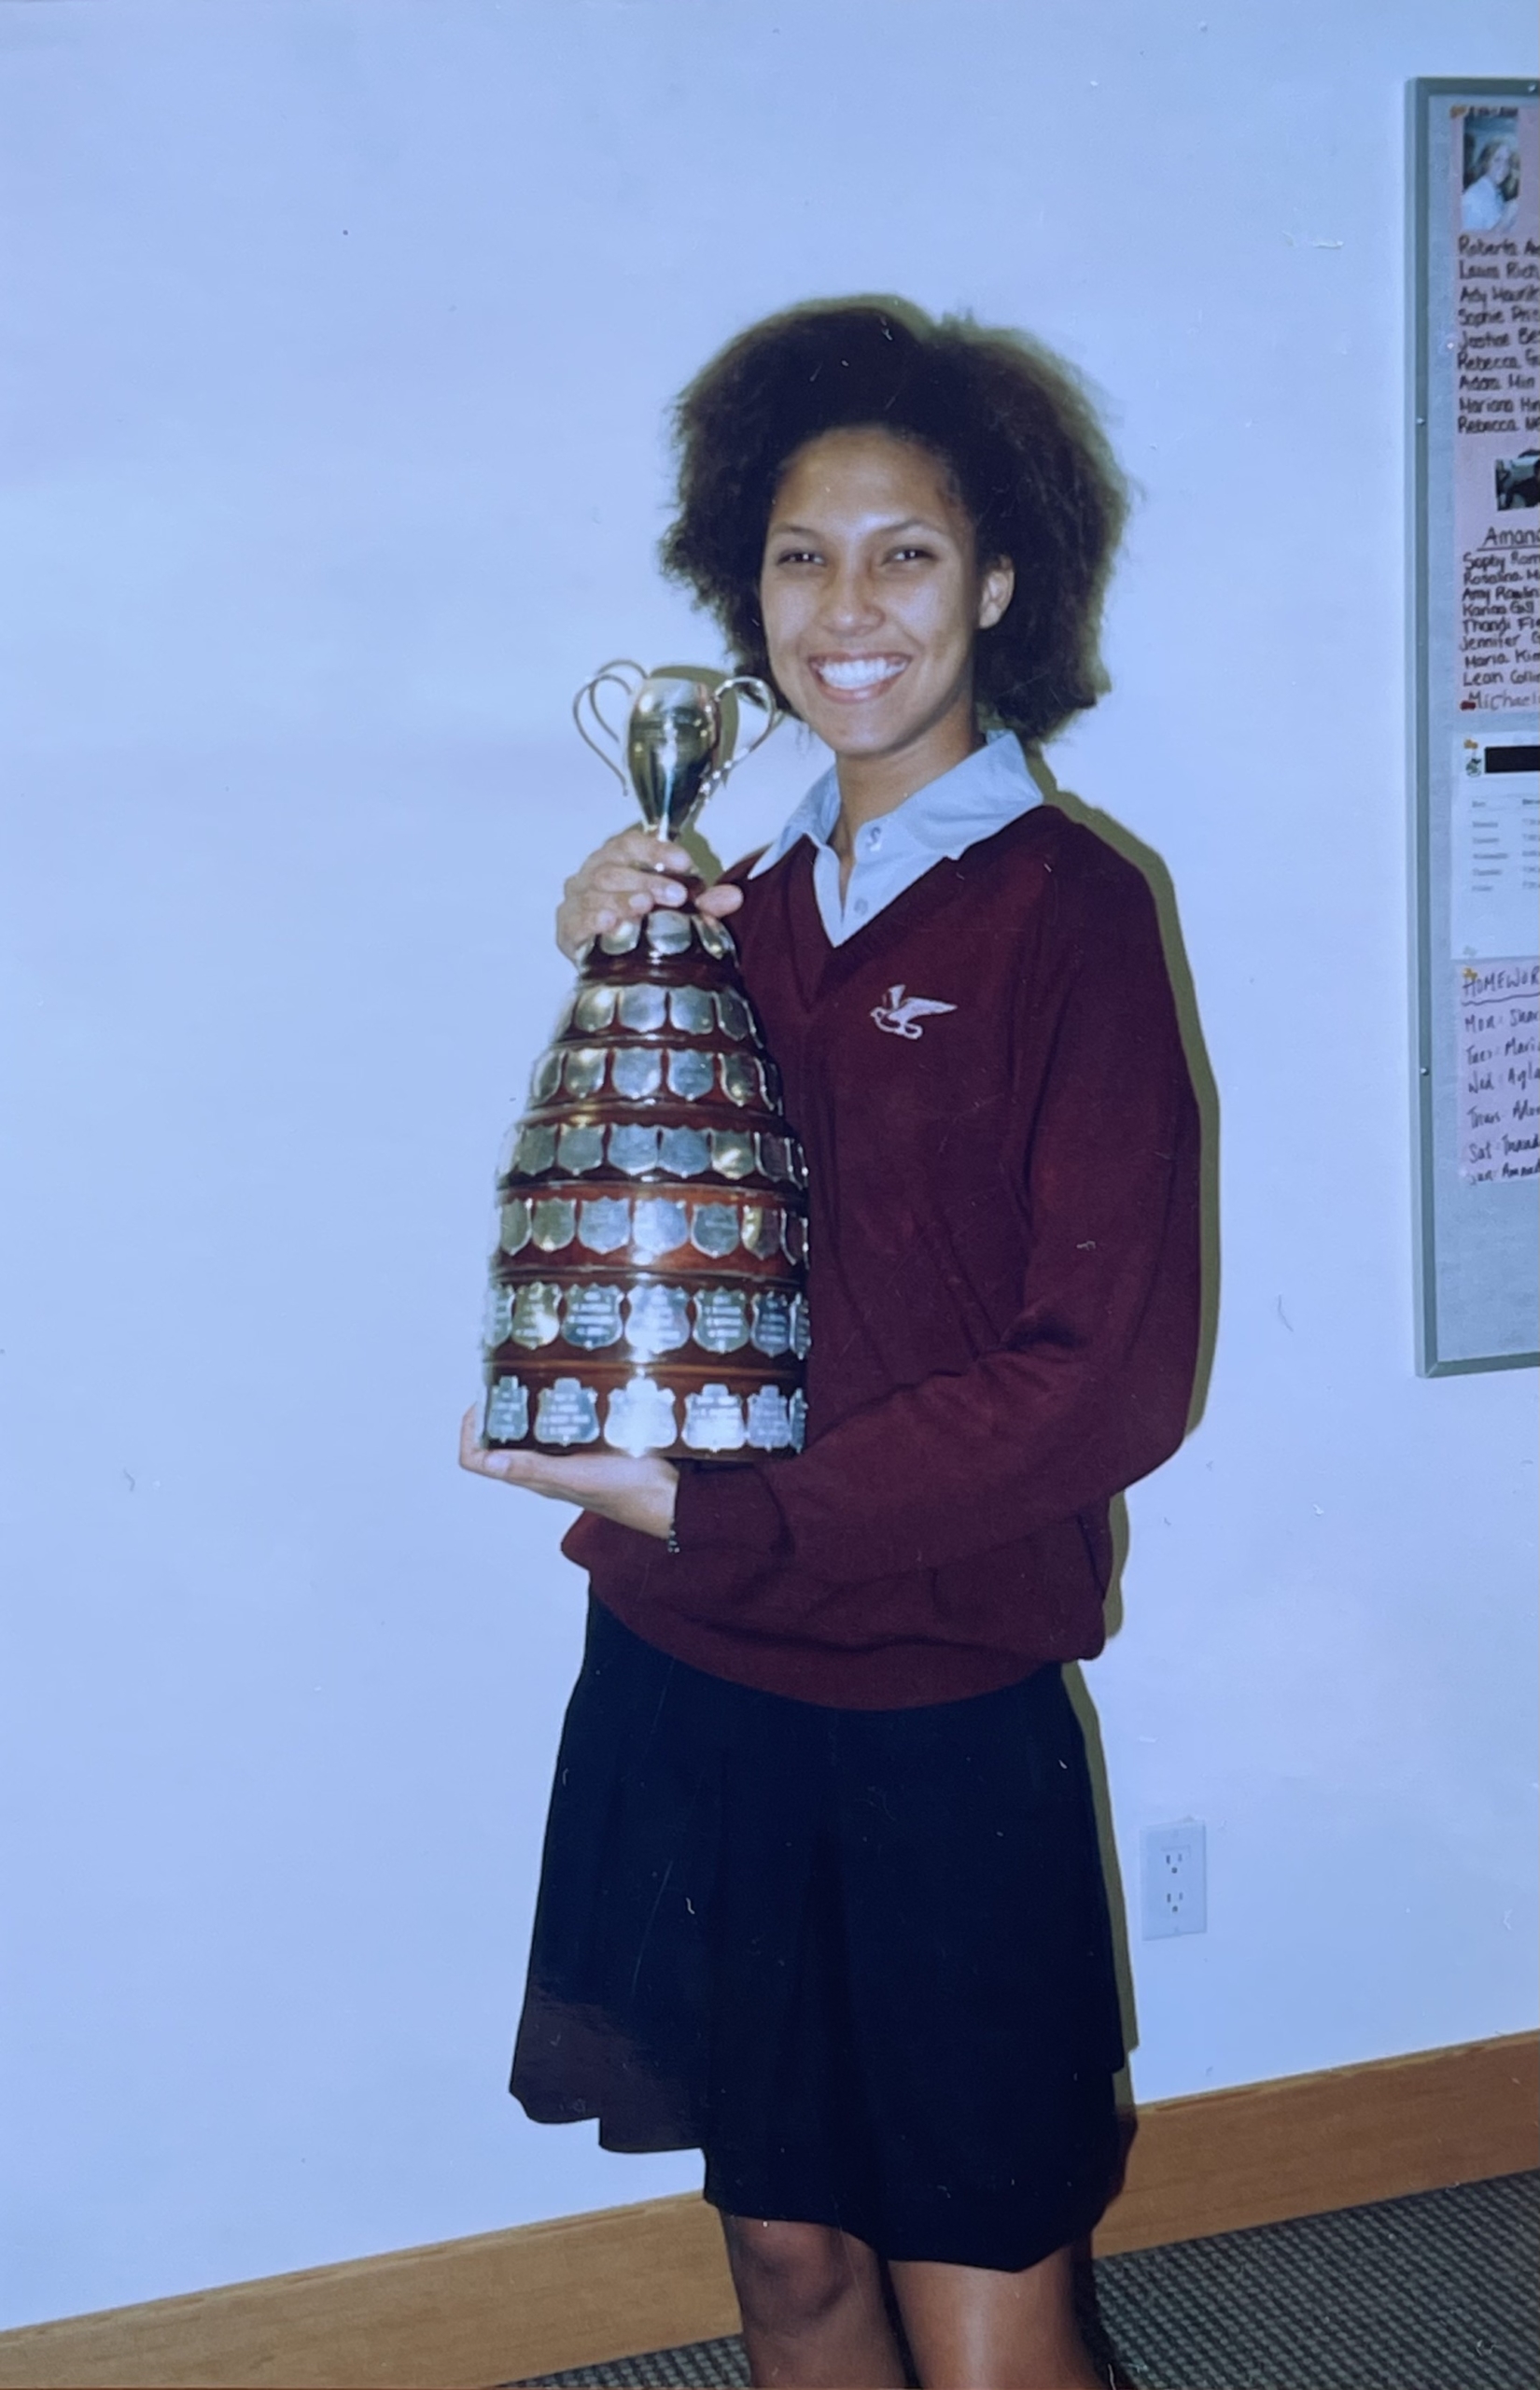 Amanda Banks as a teenager at Shawnigan Lake School holding a trophy